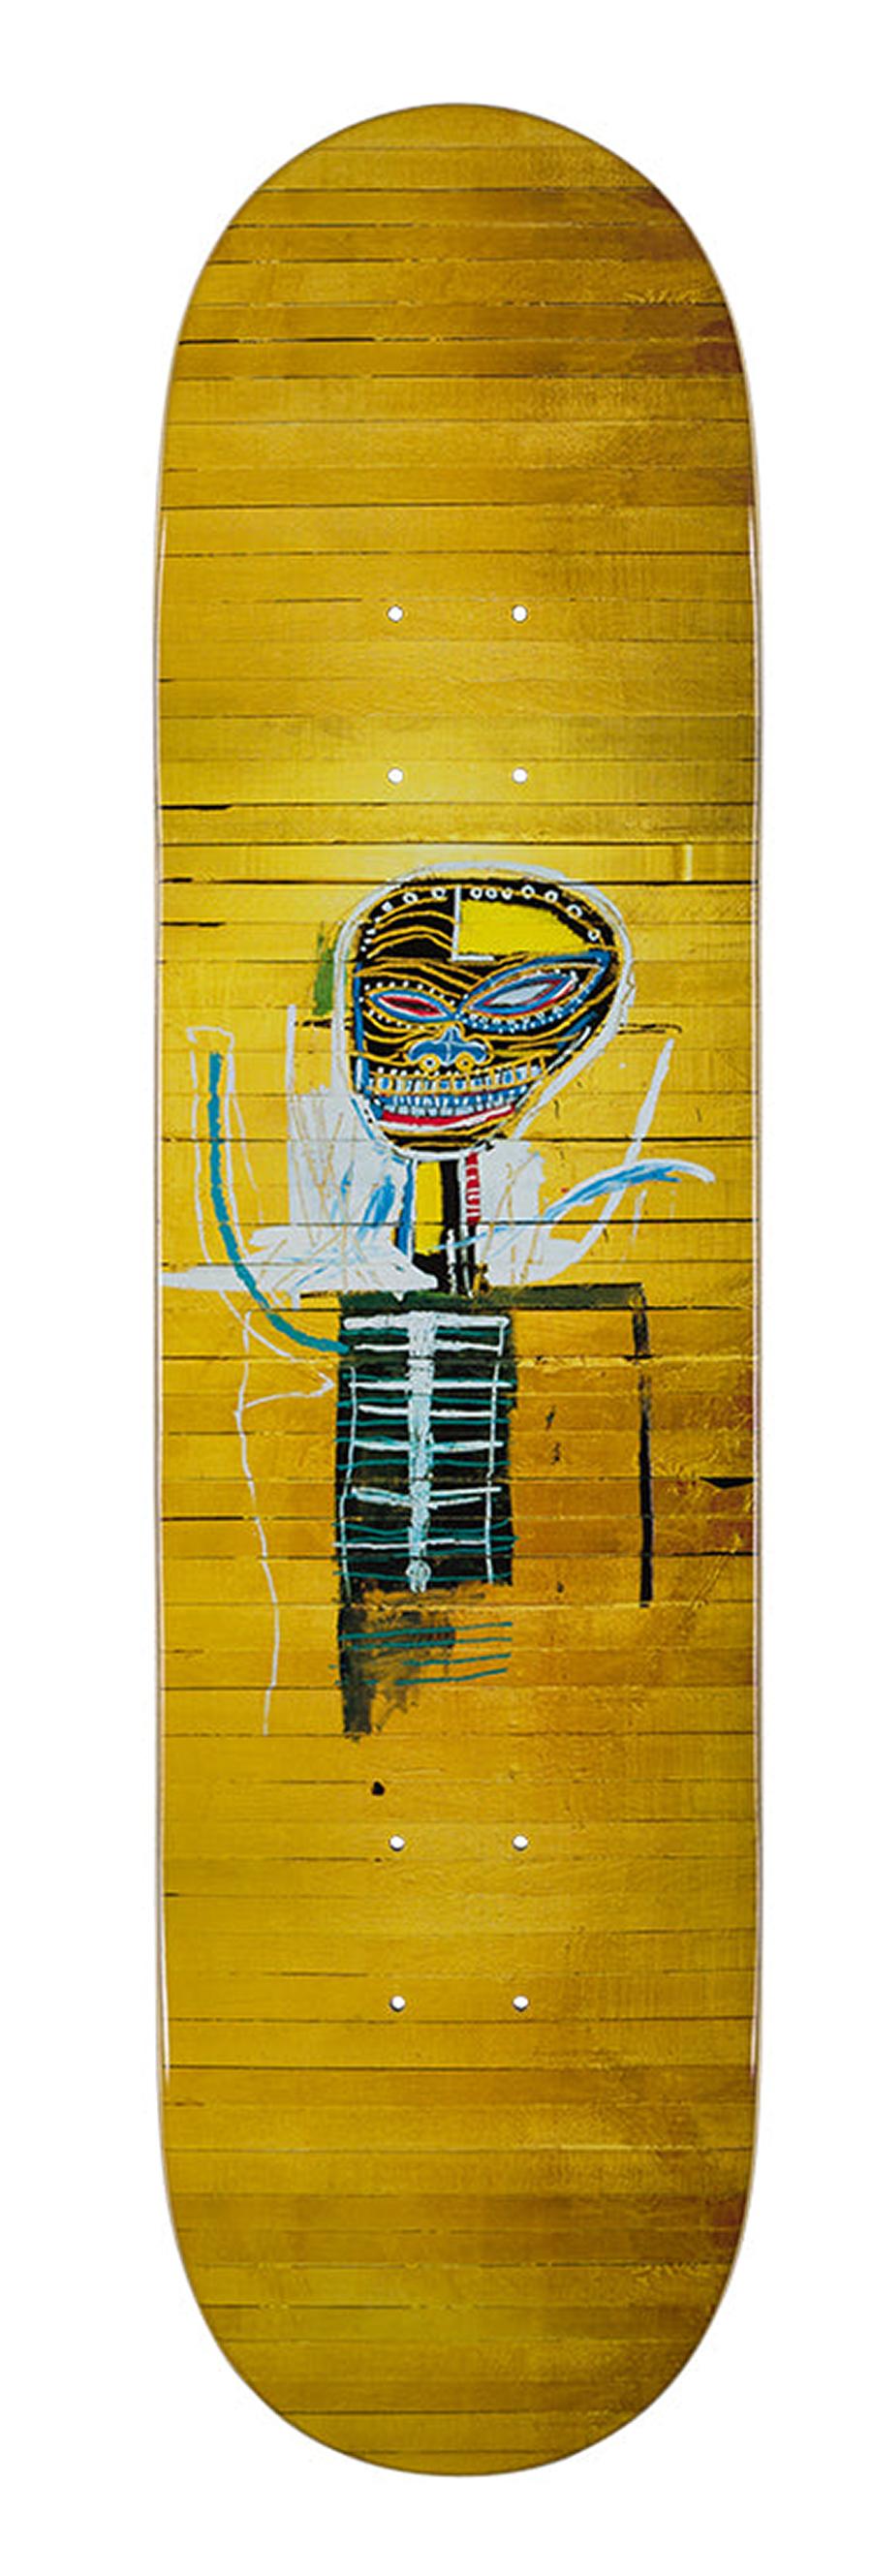 Basquiat Skateboard Decks: set of 3 works (Basquiat A-One, Toxic, Gold Griot)  1